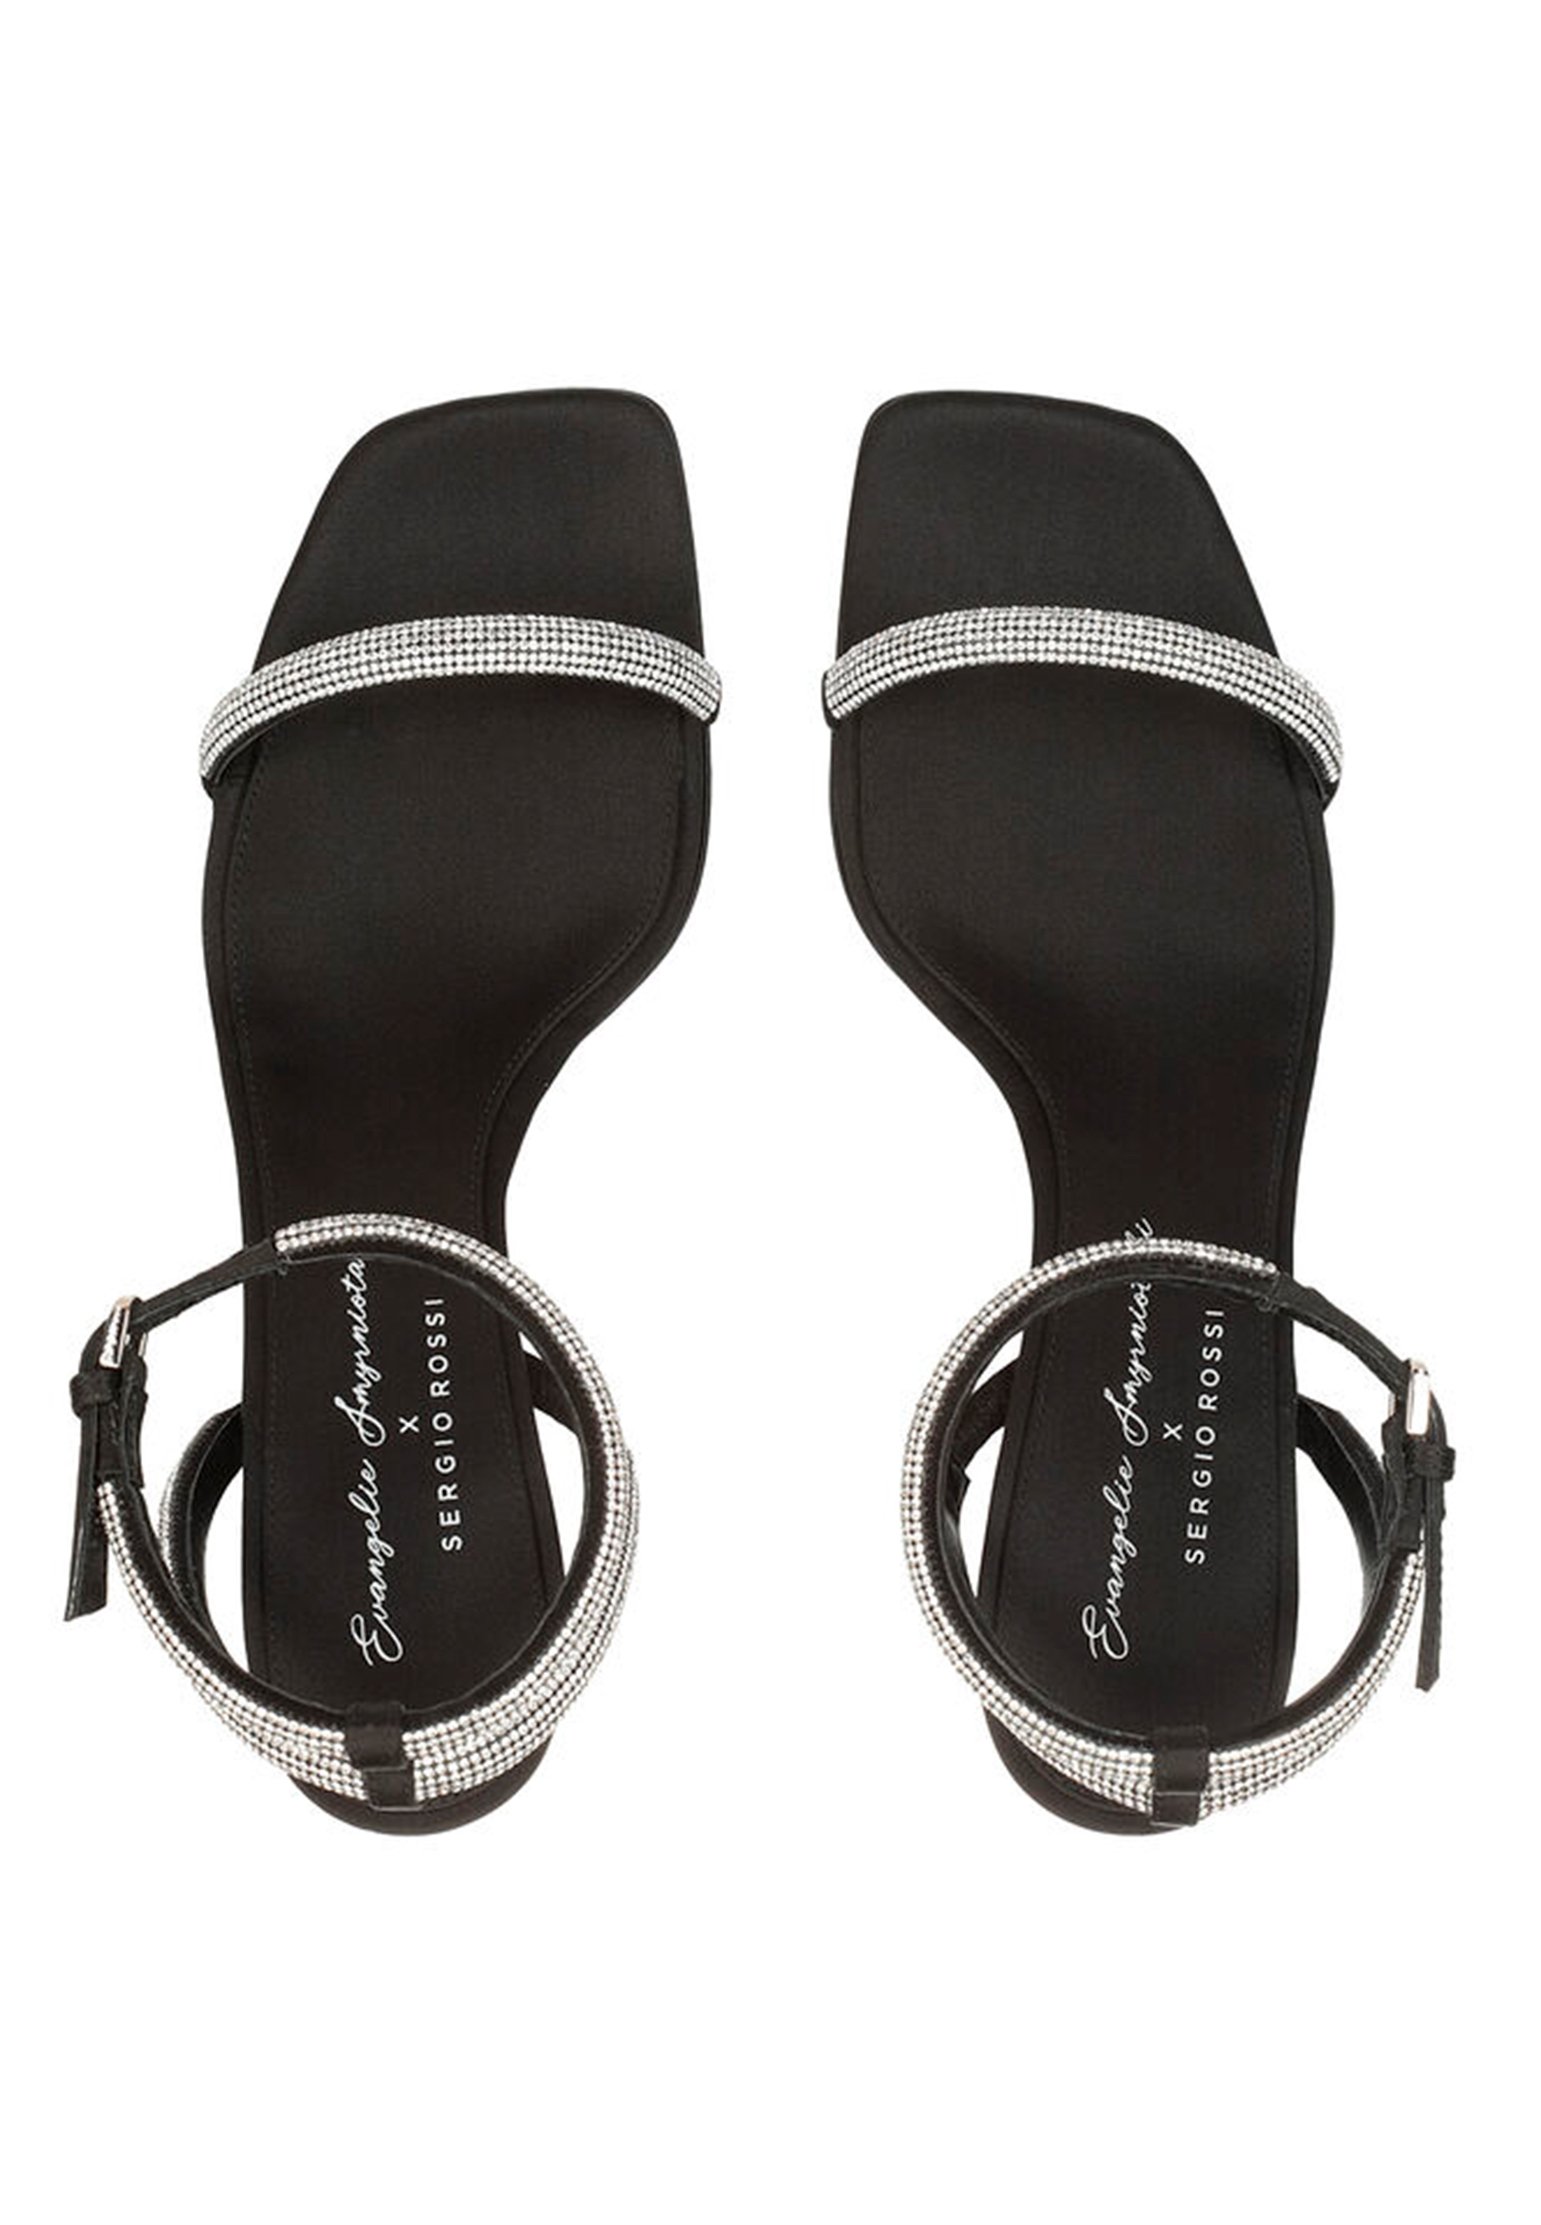 Sandal SERGIO ROSSI Color: black (Code: 1872) in online store Allure